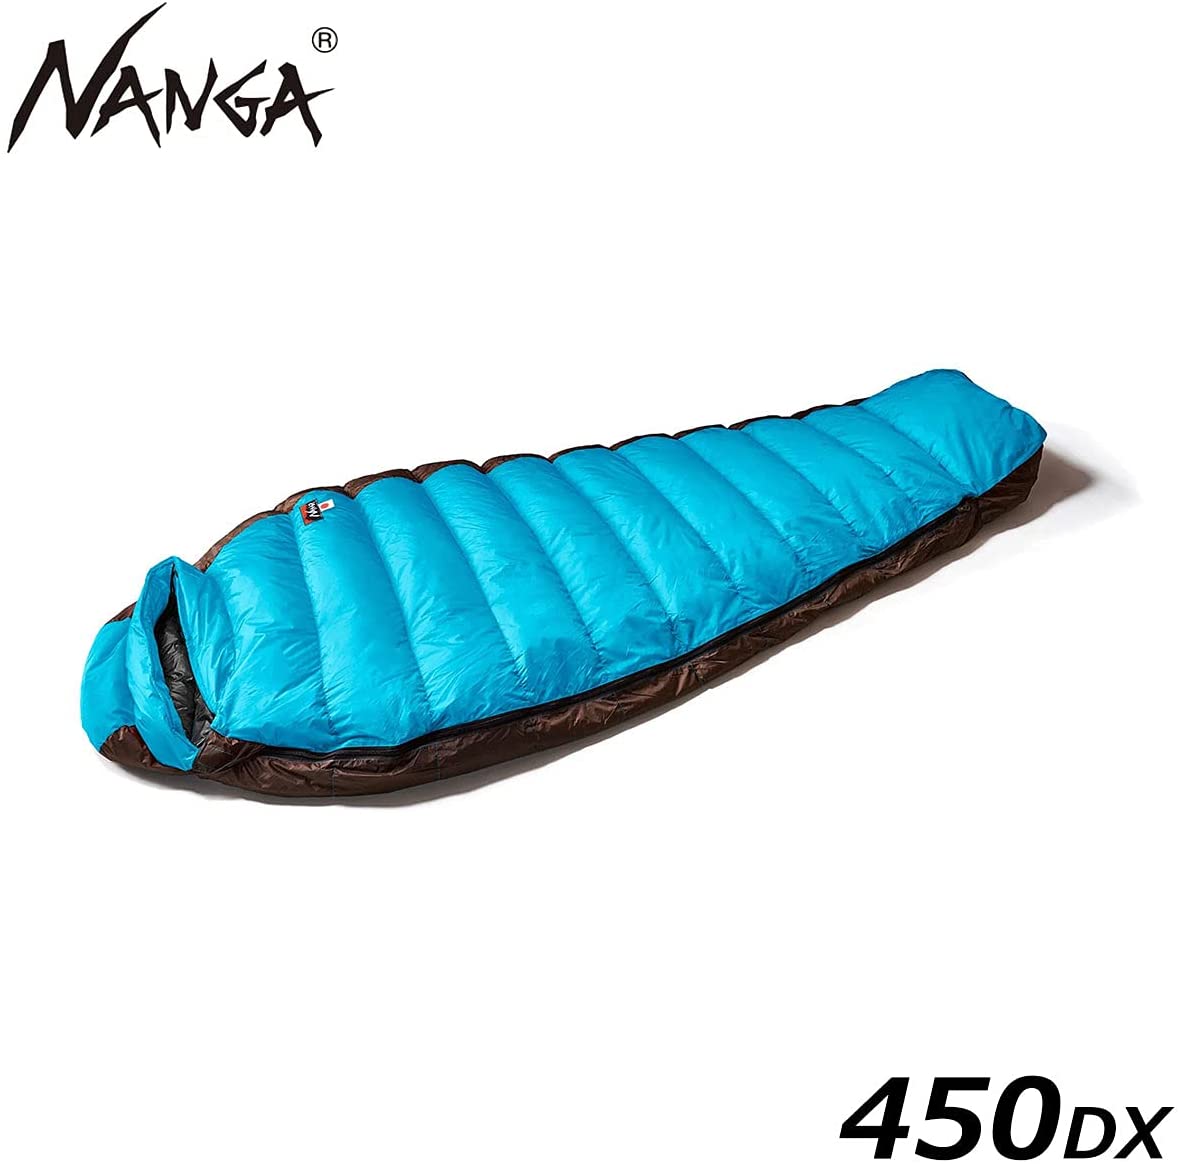 NANGA(ナンガ)│オーロラライト 450DX